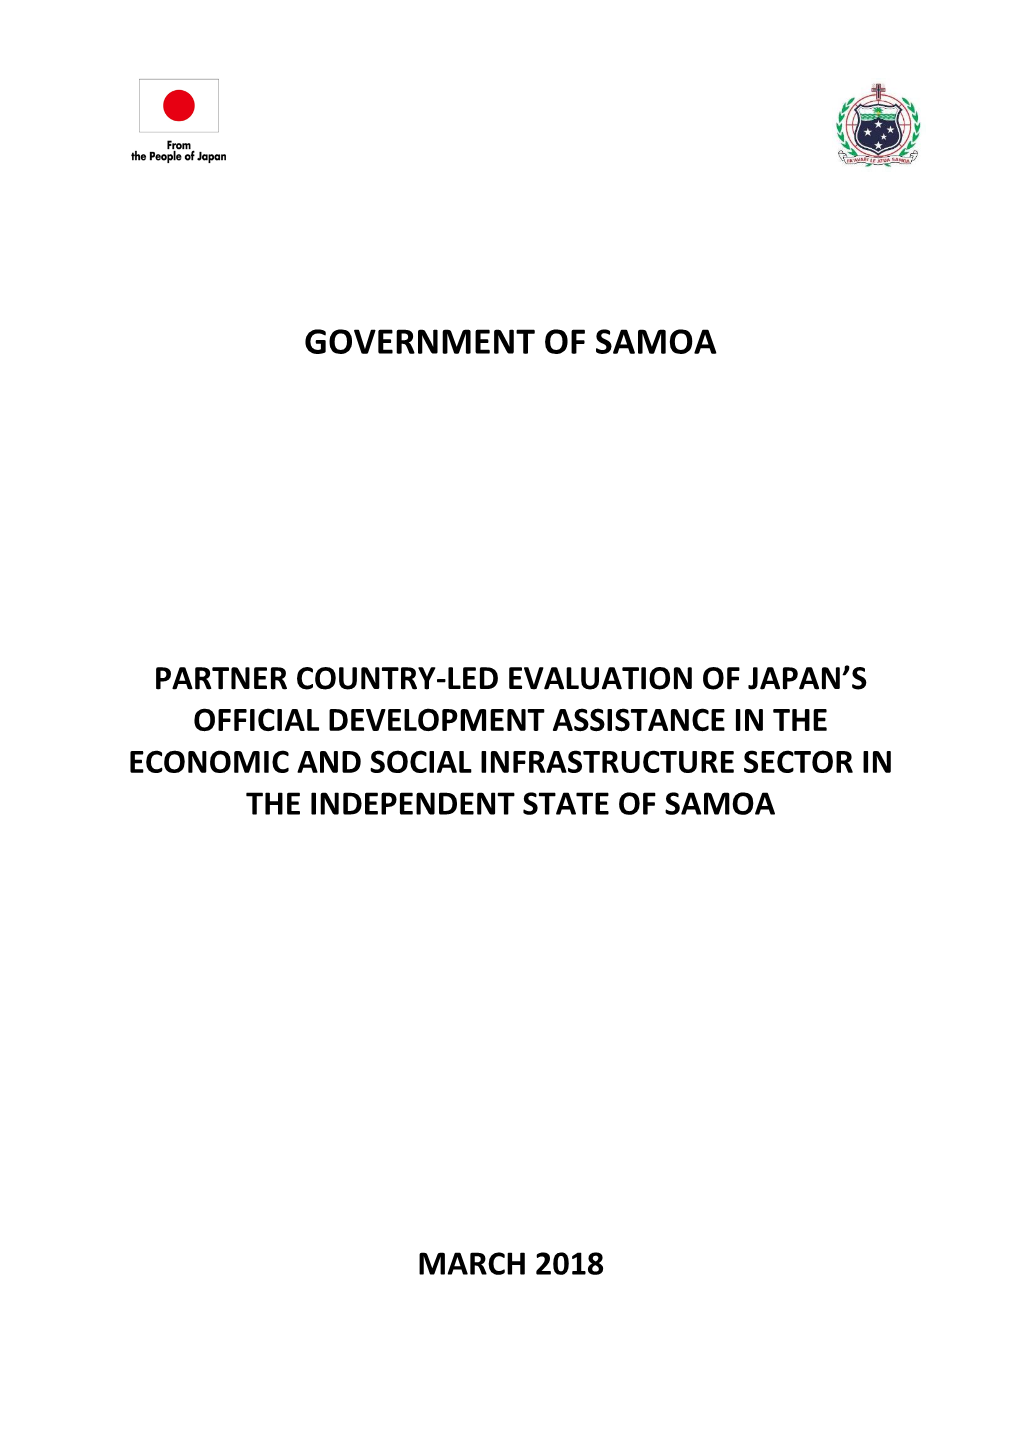 Government of Samoa